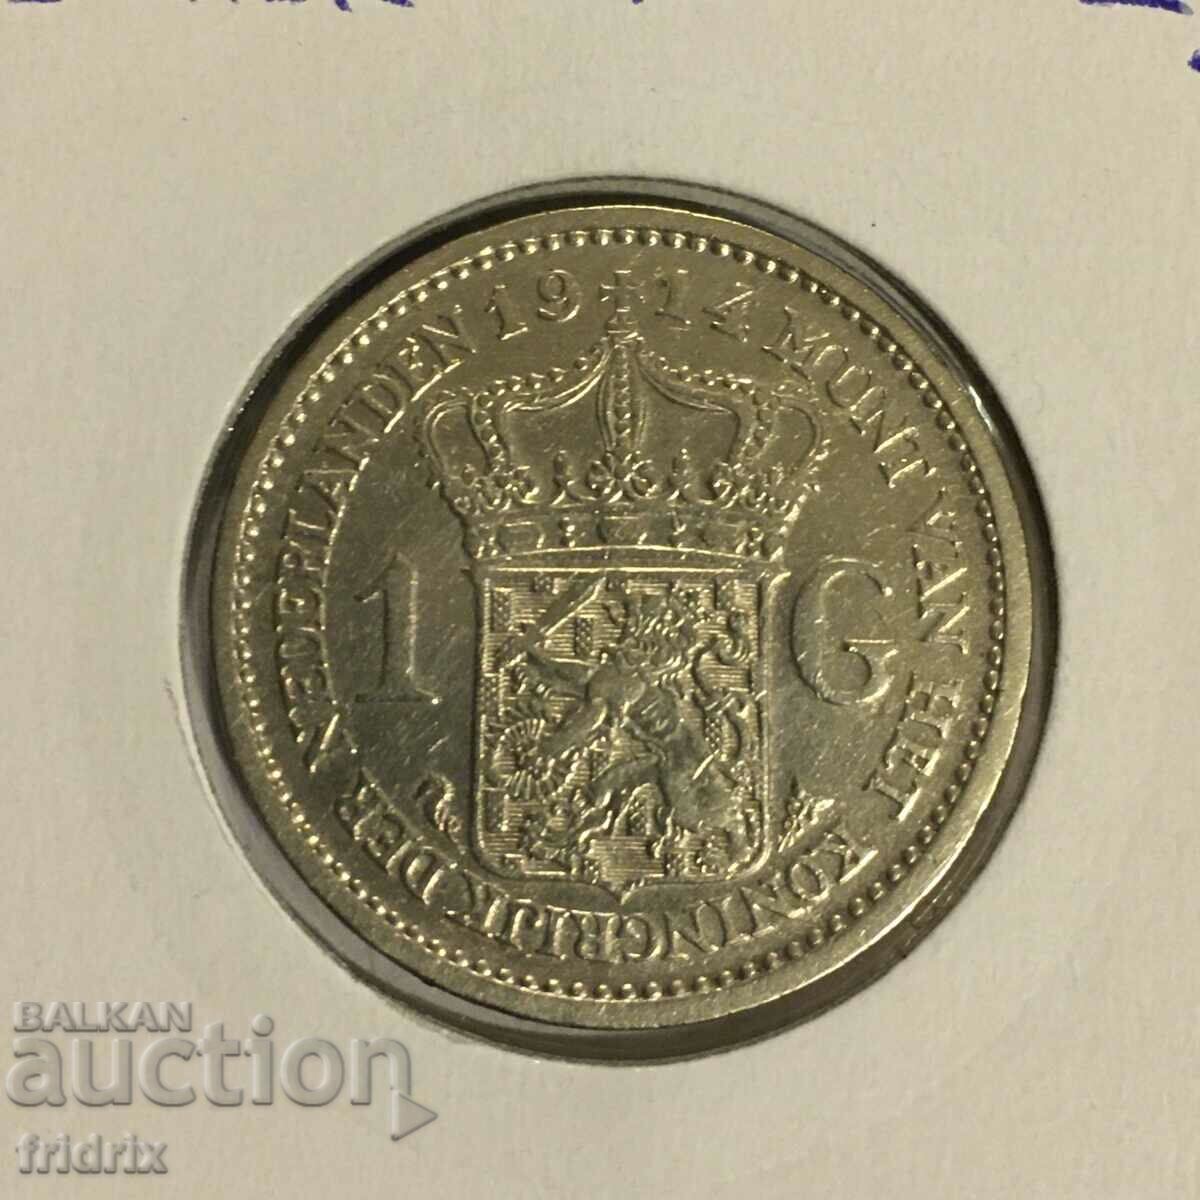 Netherlands 1 gulden 1914 / Netherlands 1 gulden 1914